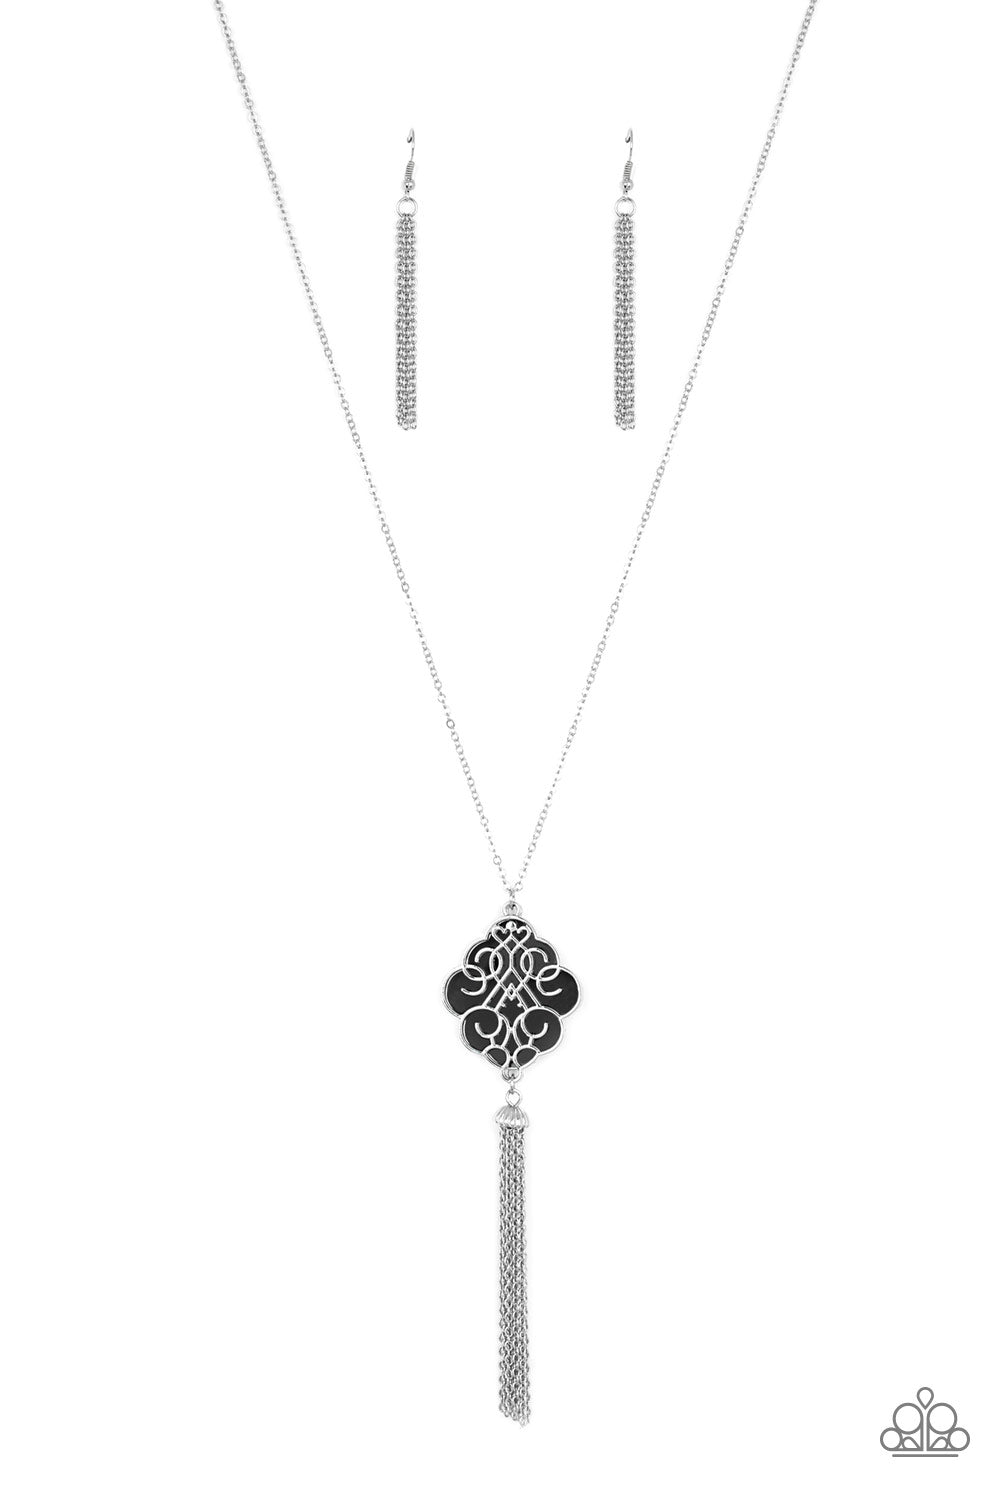 Malibu Mandala - Black Necklace freeshipping - JewLz4u Gemstone Gallery